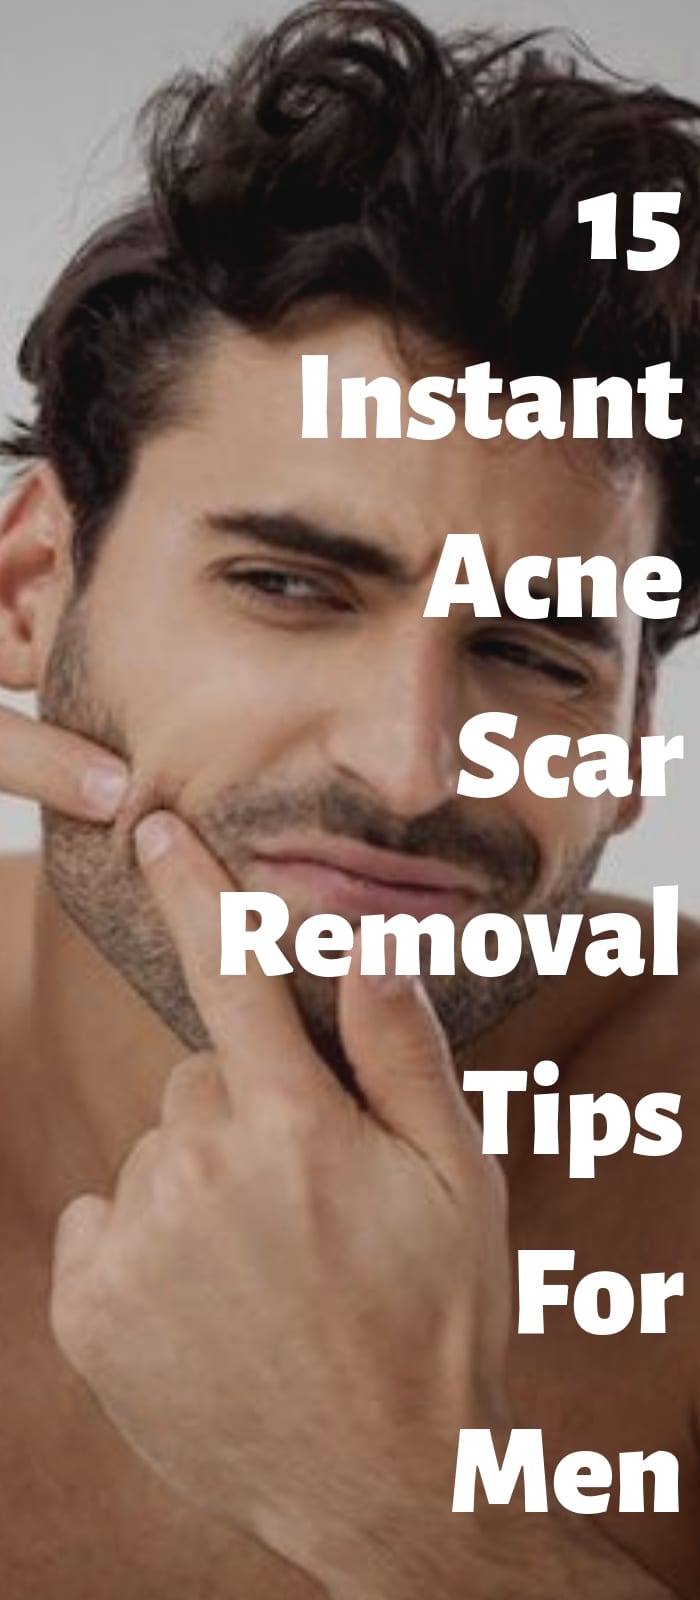 15 Instant Acne Scar Removal Tips For Men